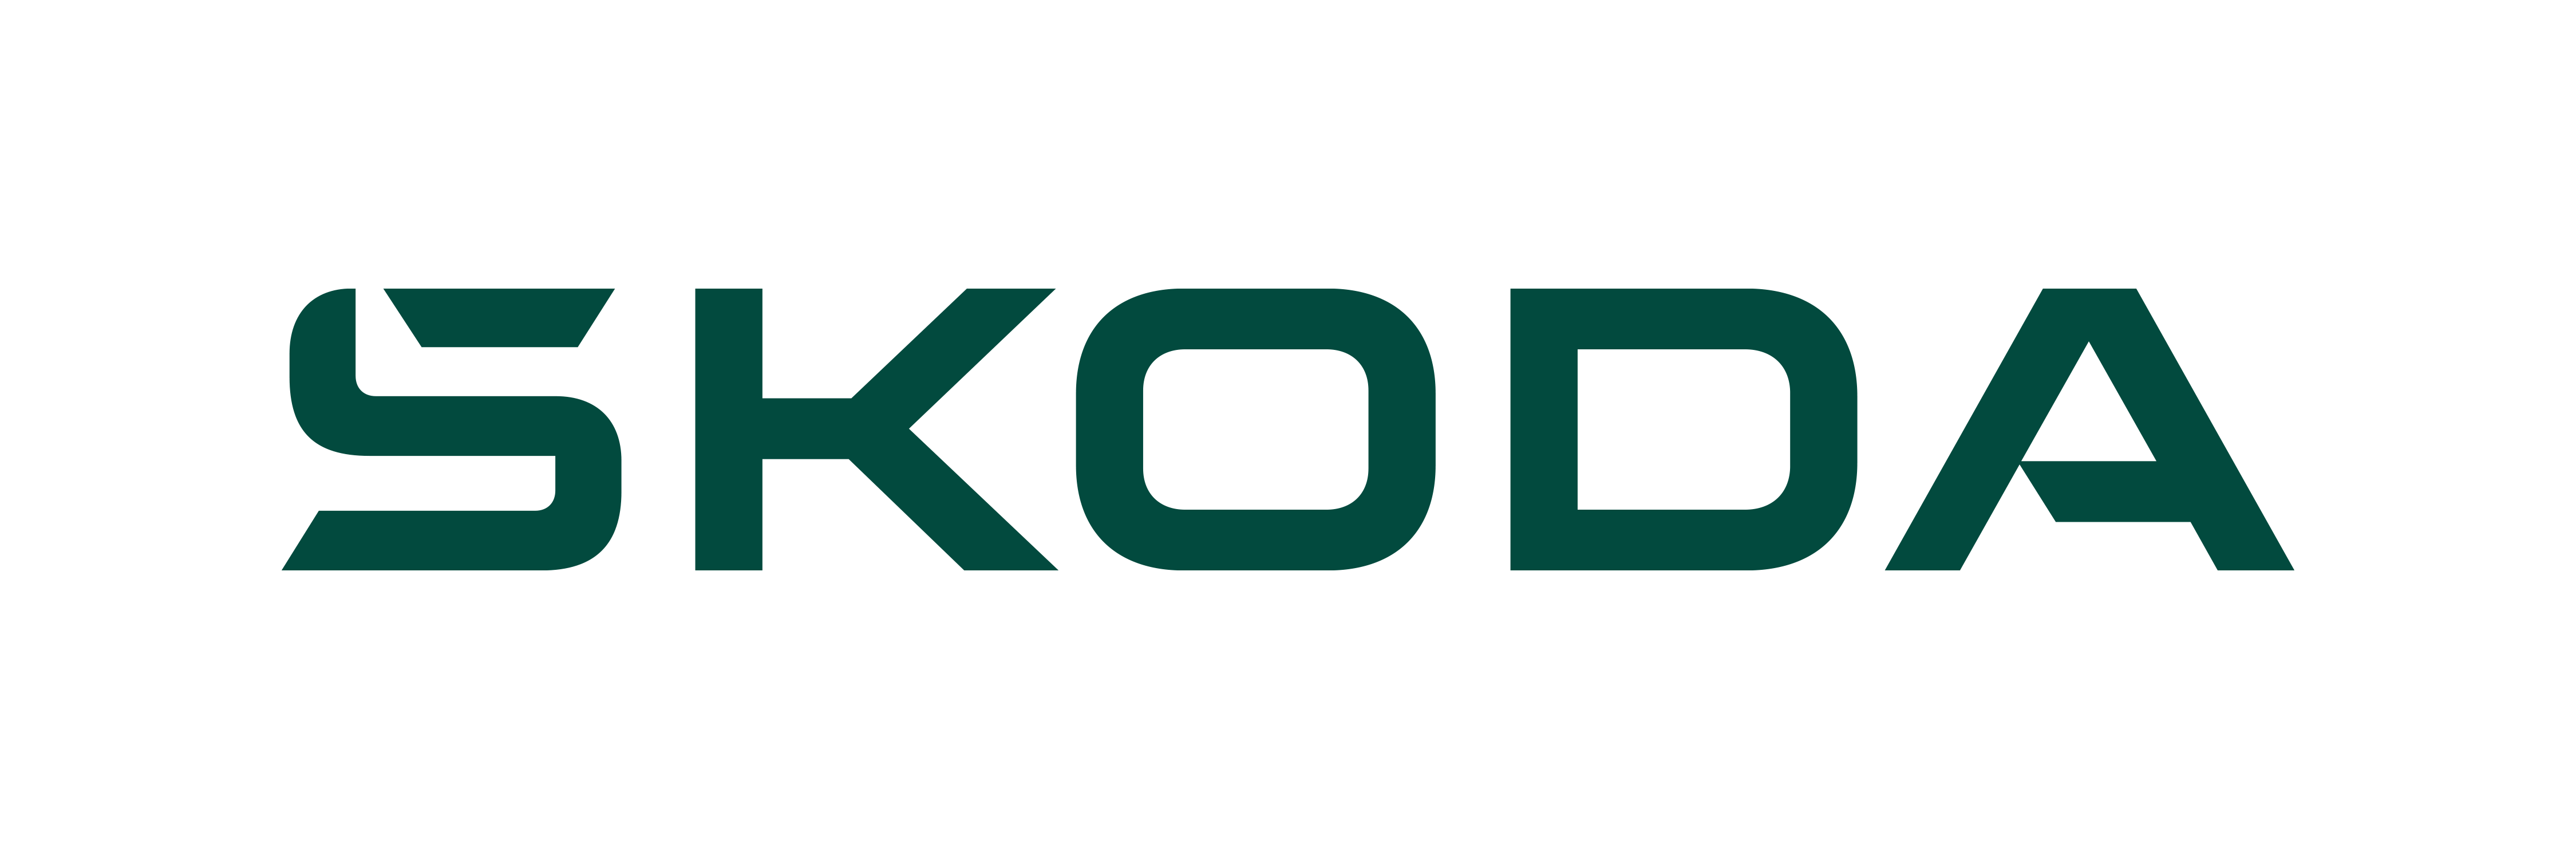 Logo Skoda 2022 01 A4c16197